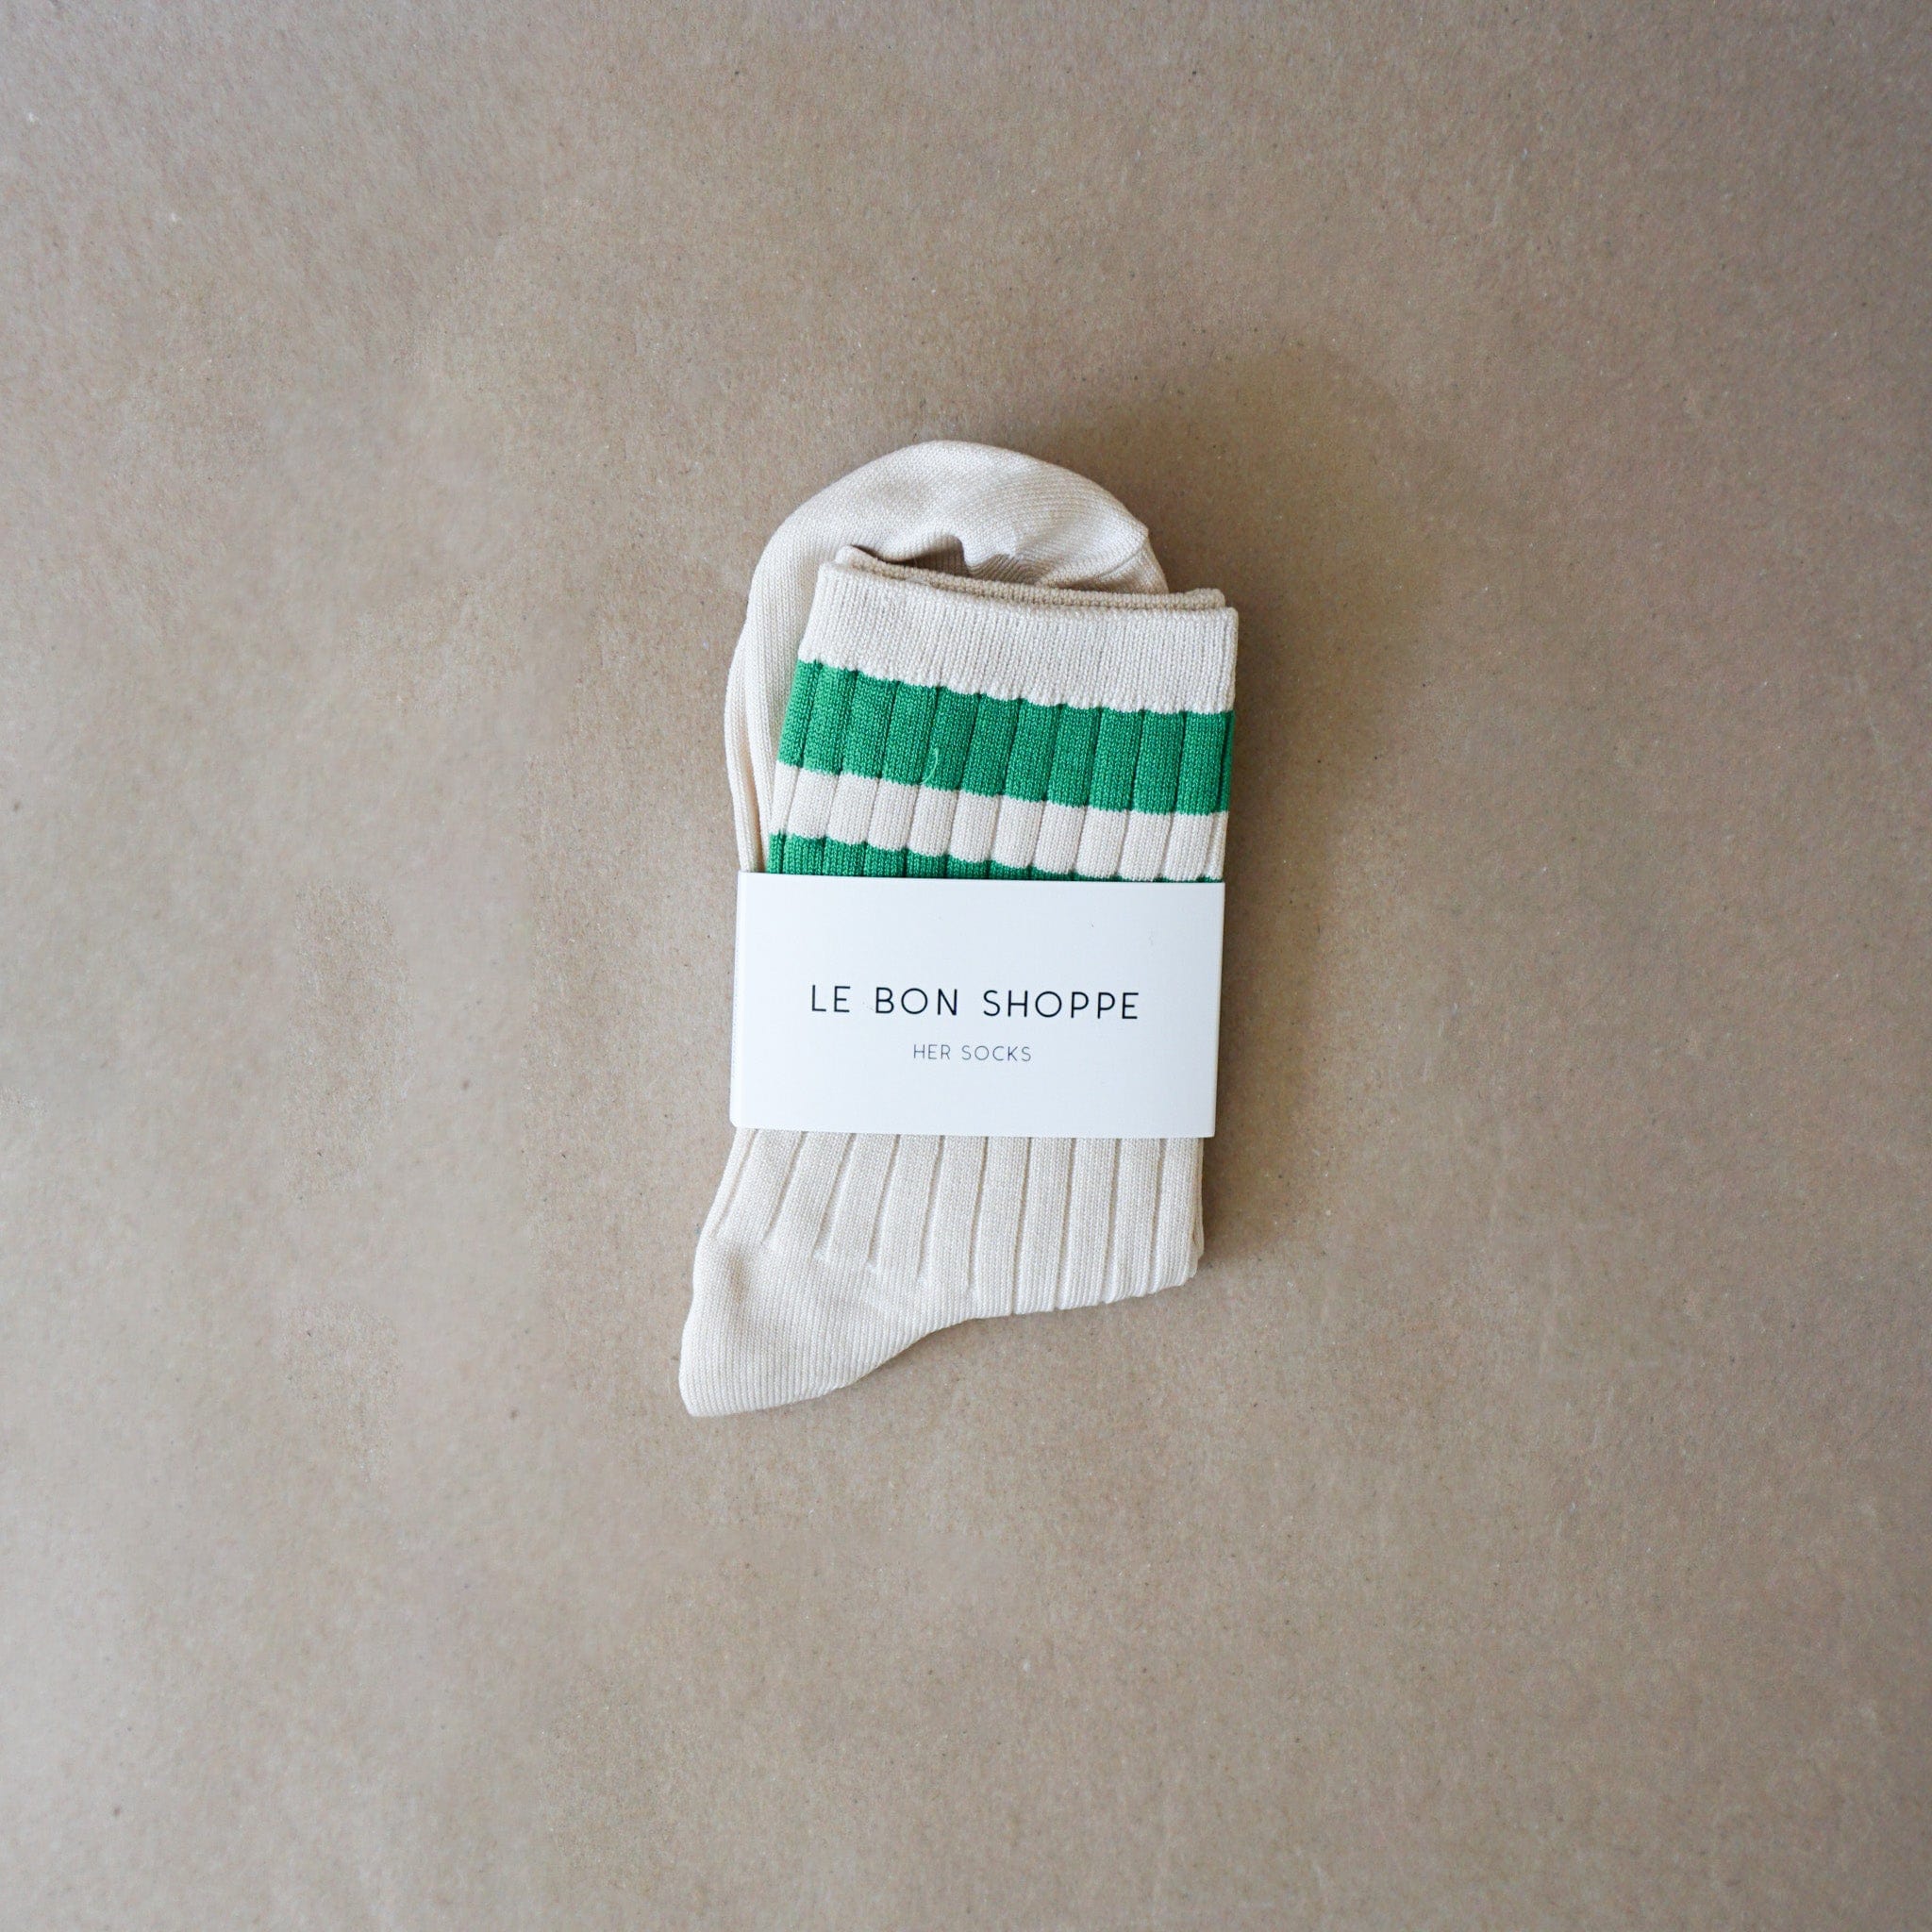 Le Bon Shoppe socks Green Le Bon "Her Socks" Varsity